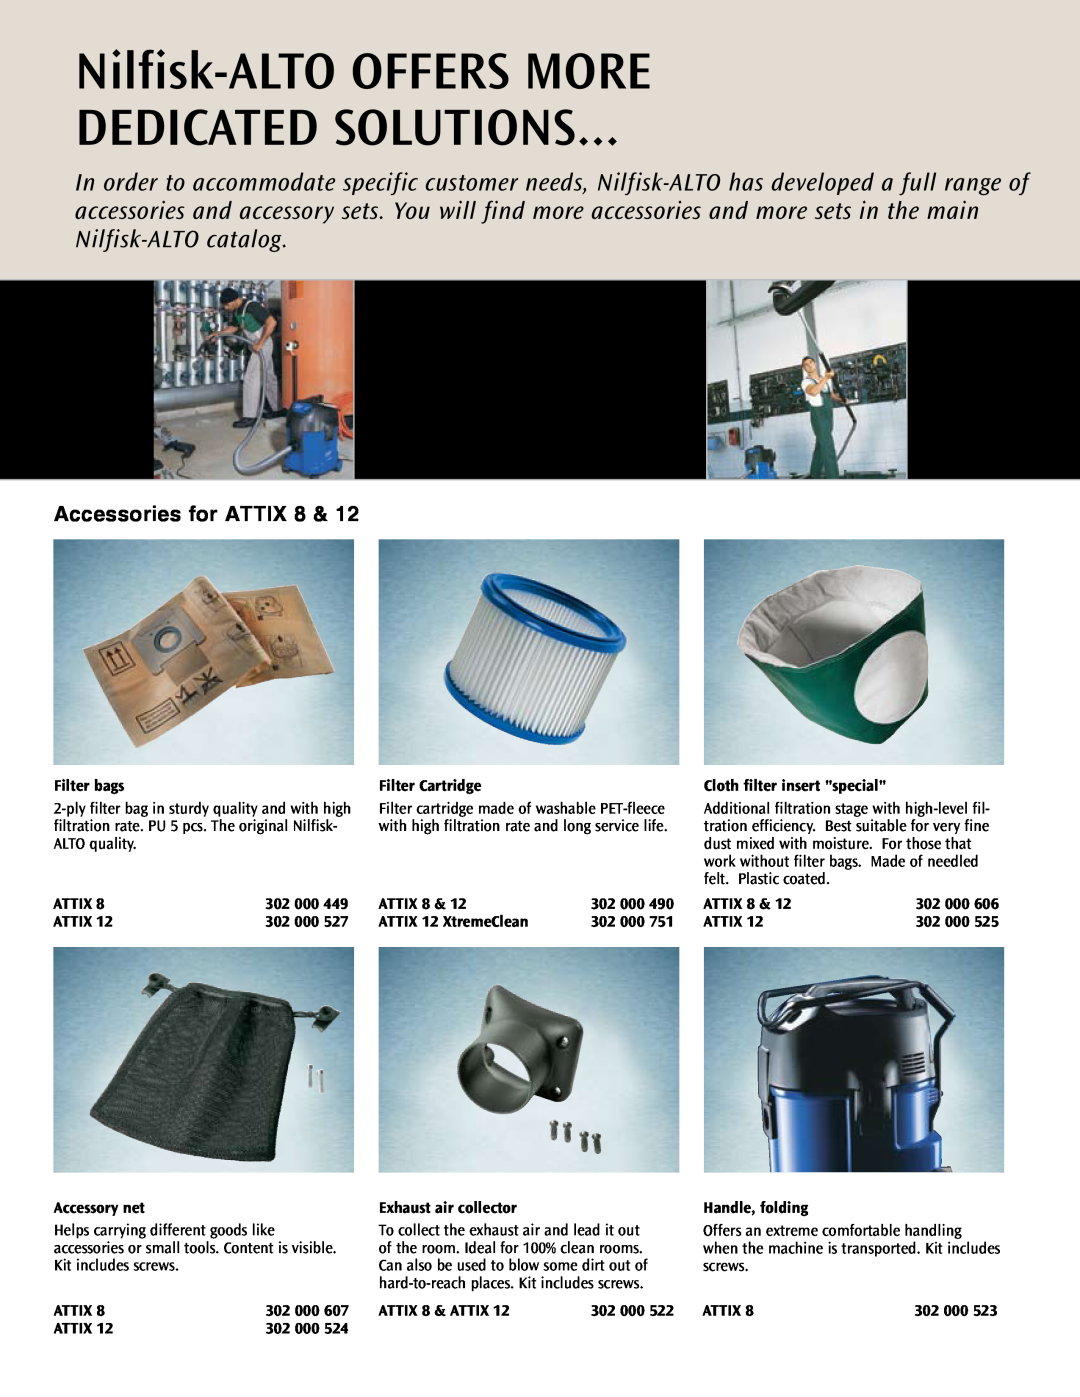 Nilfisk-ALTO Attix Series manual Nilfisk-altooffers more dedicated solutions, Accessories for ATTIX 